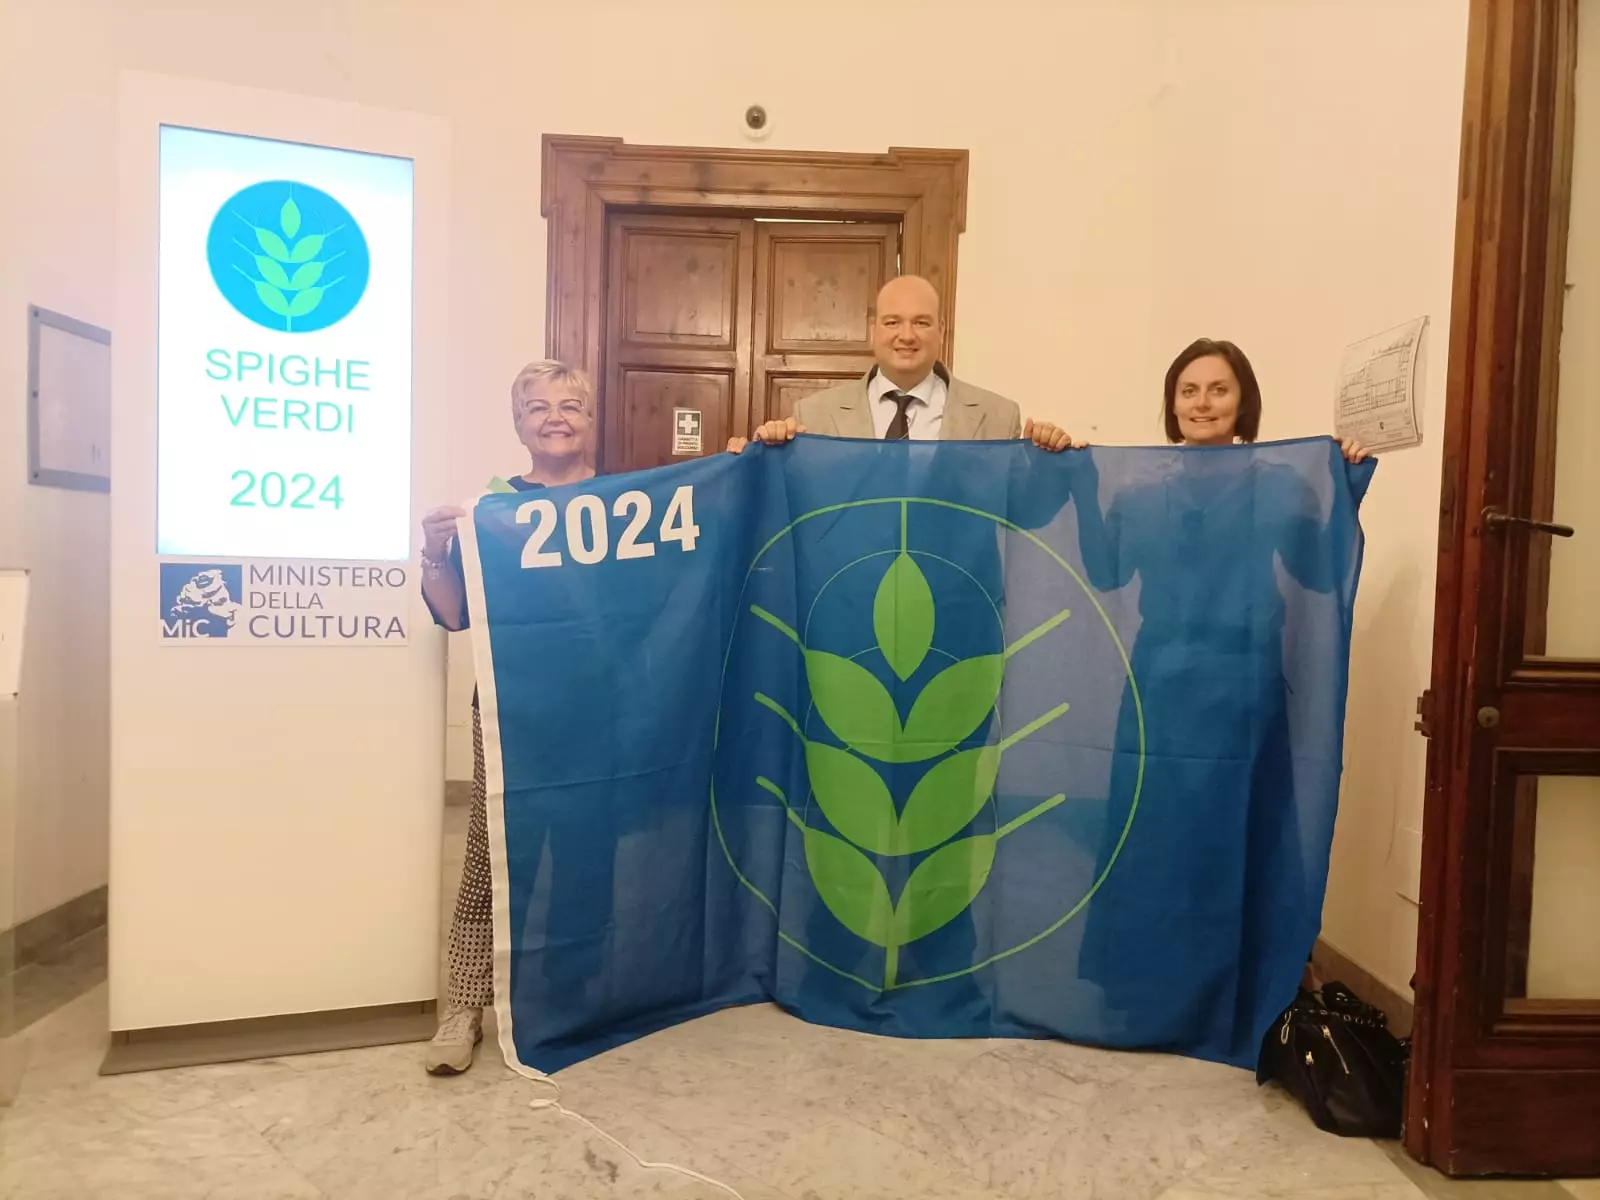 Spighe verdi -Agnese Dogliani, Umberto Ferrondi e Stefania Allasia